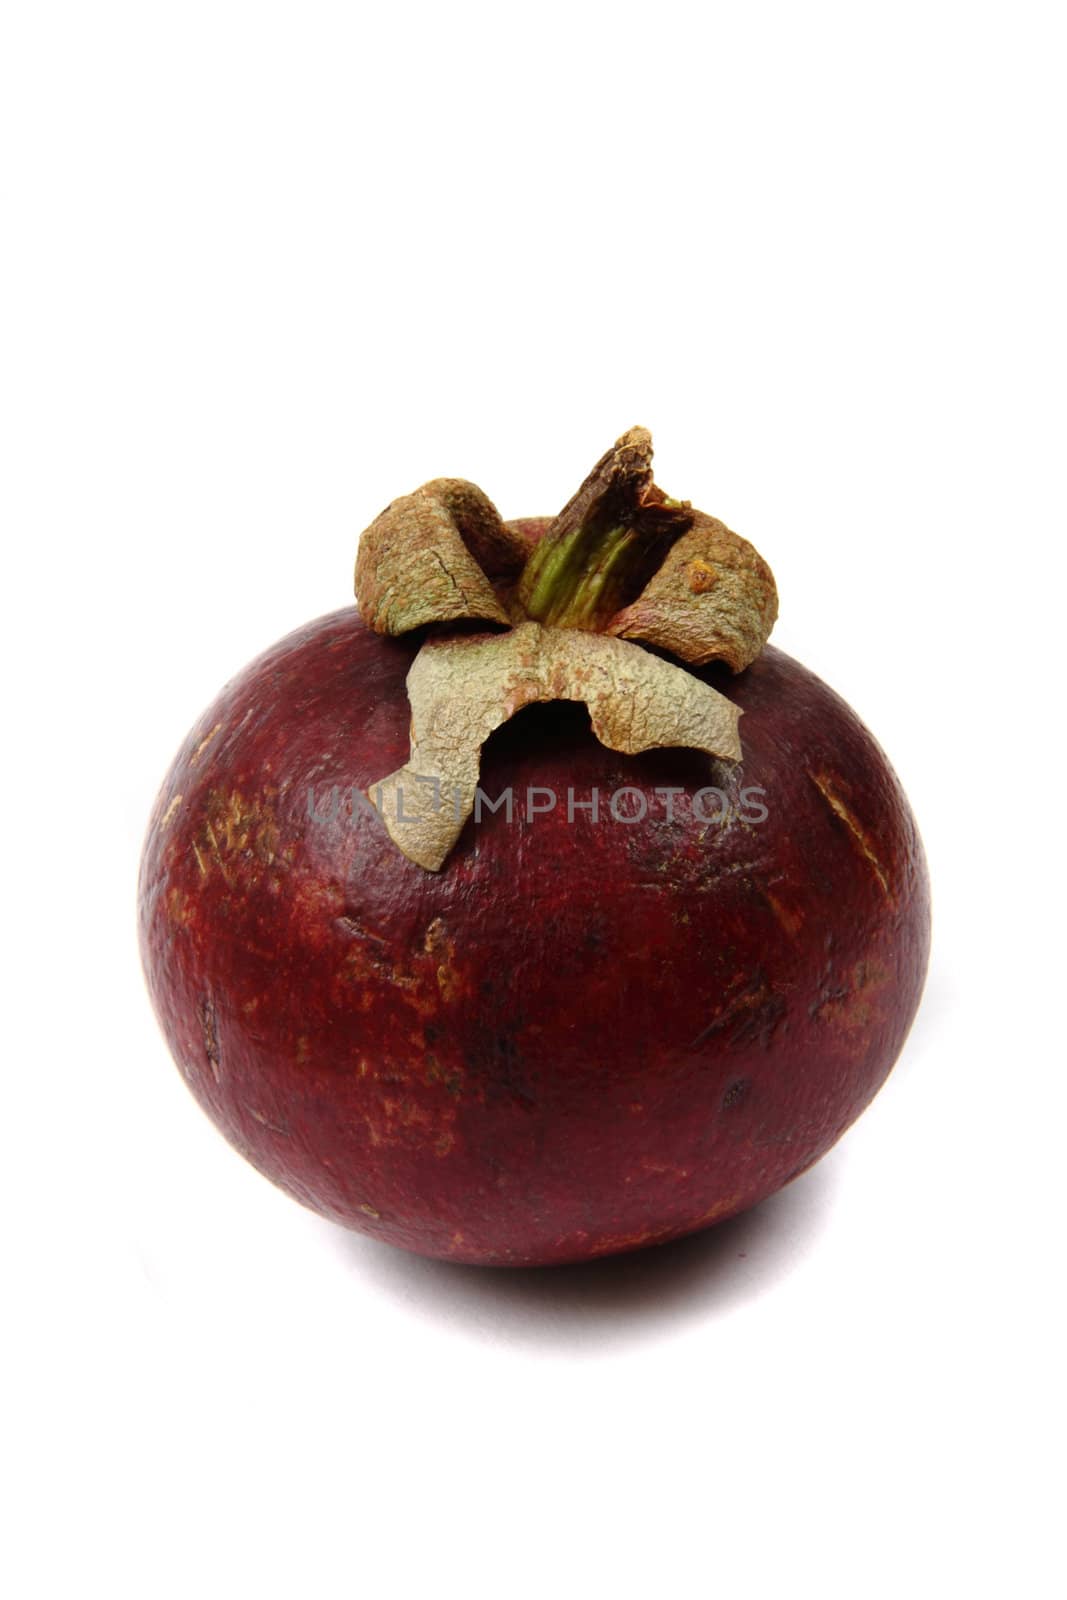 mangostan fruit  by jonnysek